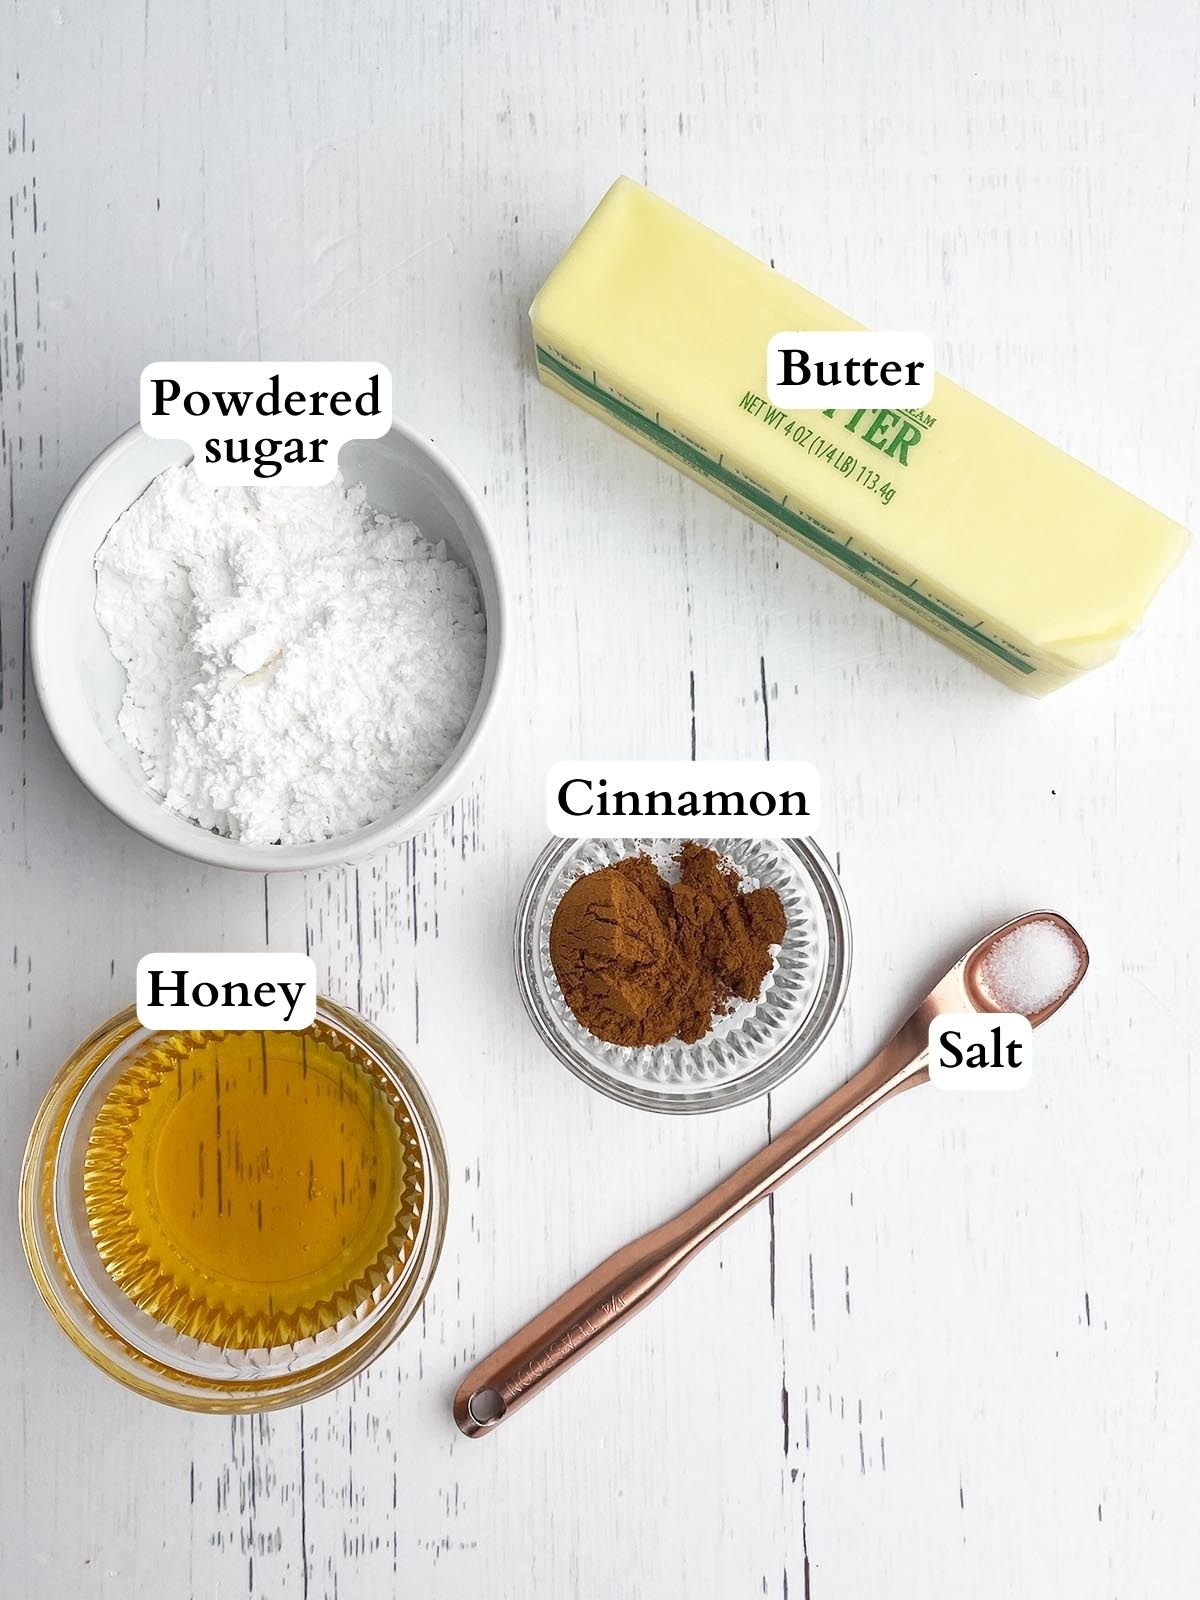 Texas Roadhouse cinnamon honey butter ingredients